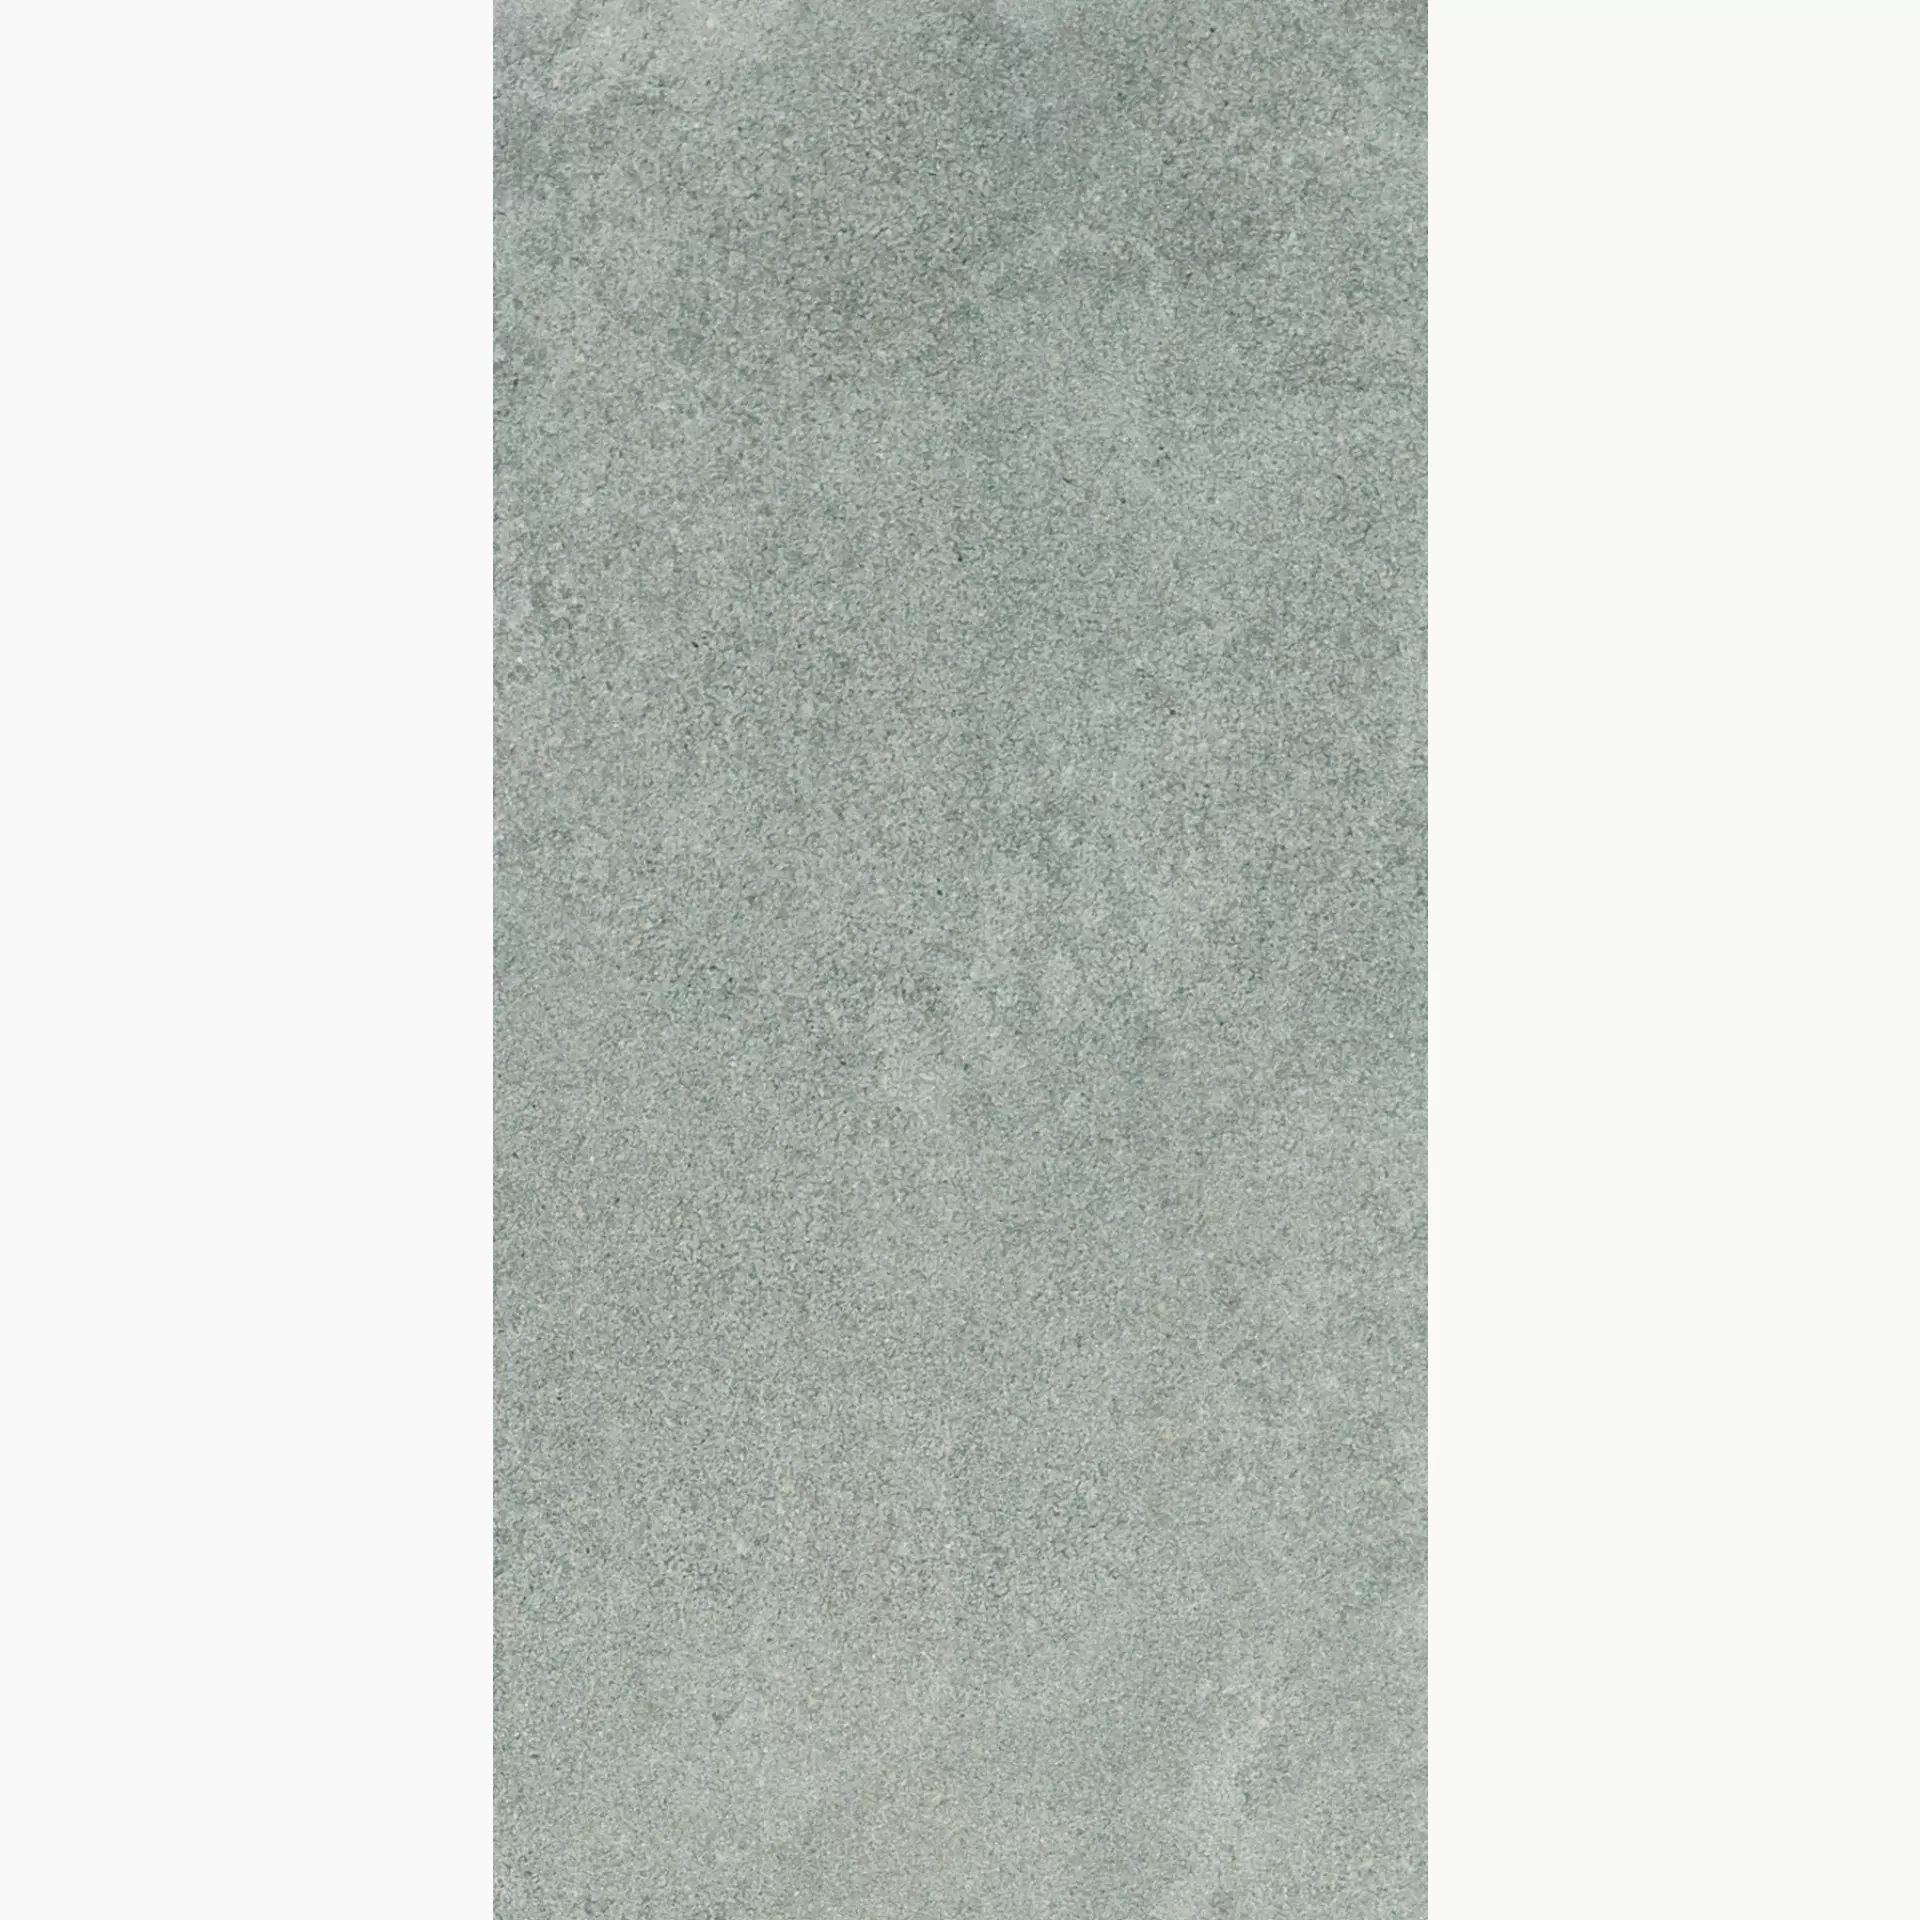 Ergon Stone Project Grey Naturale Controfalda E1D8 30x60cm rectified 9,5mm